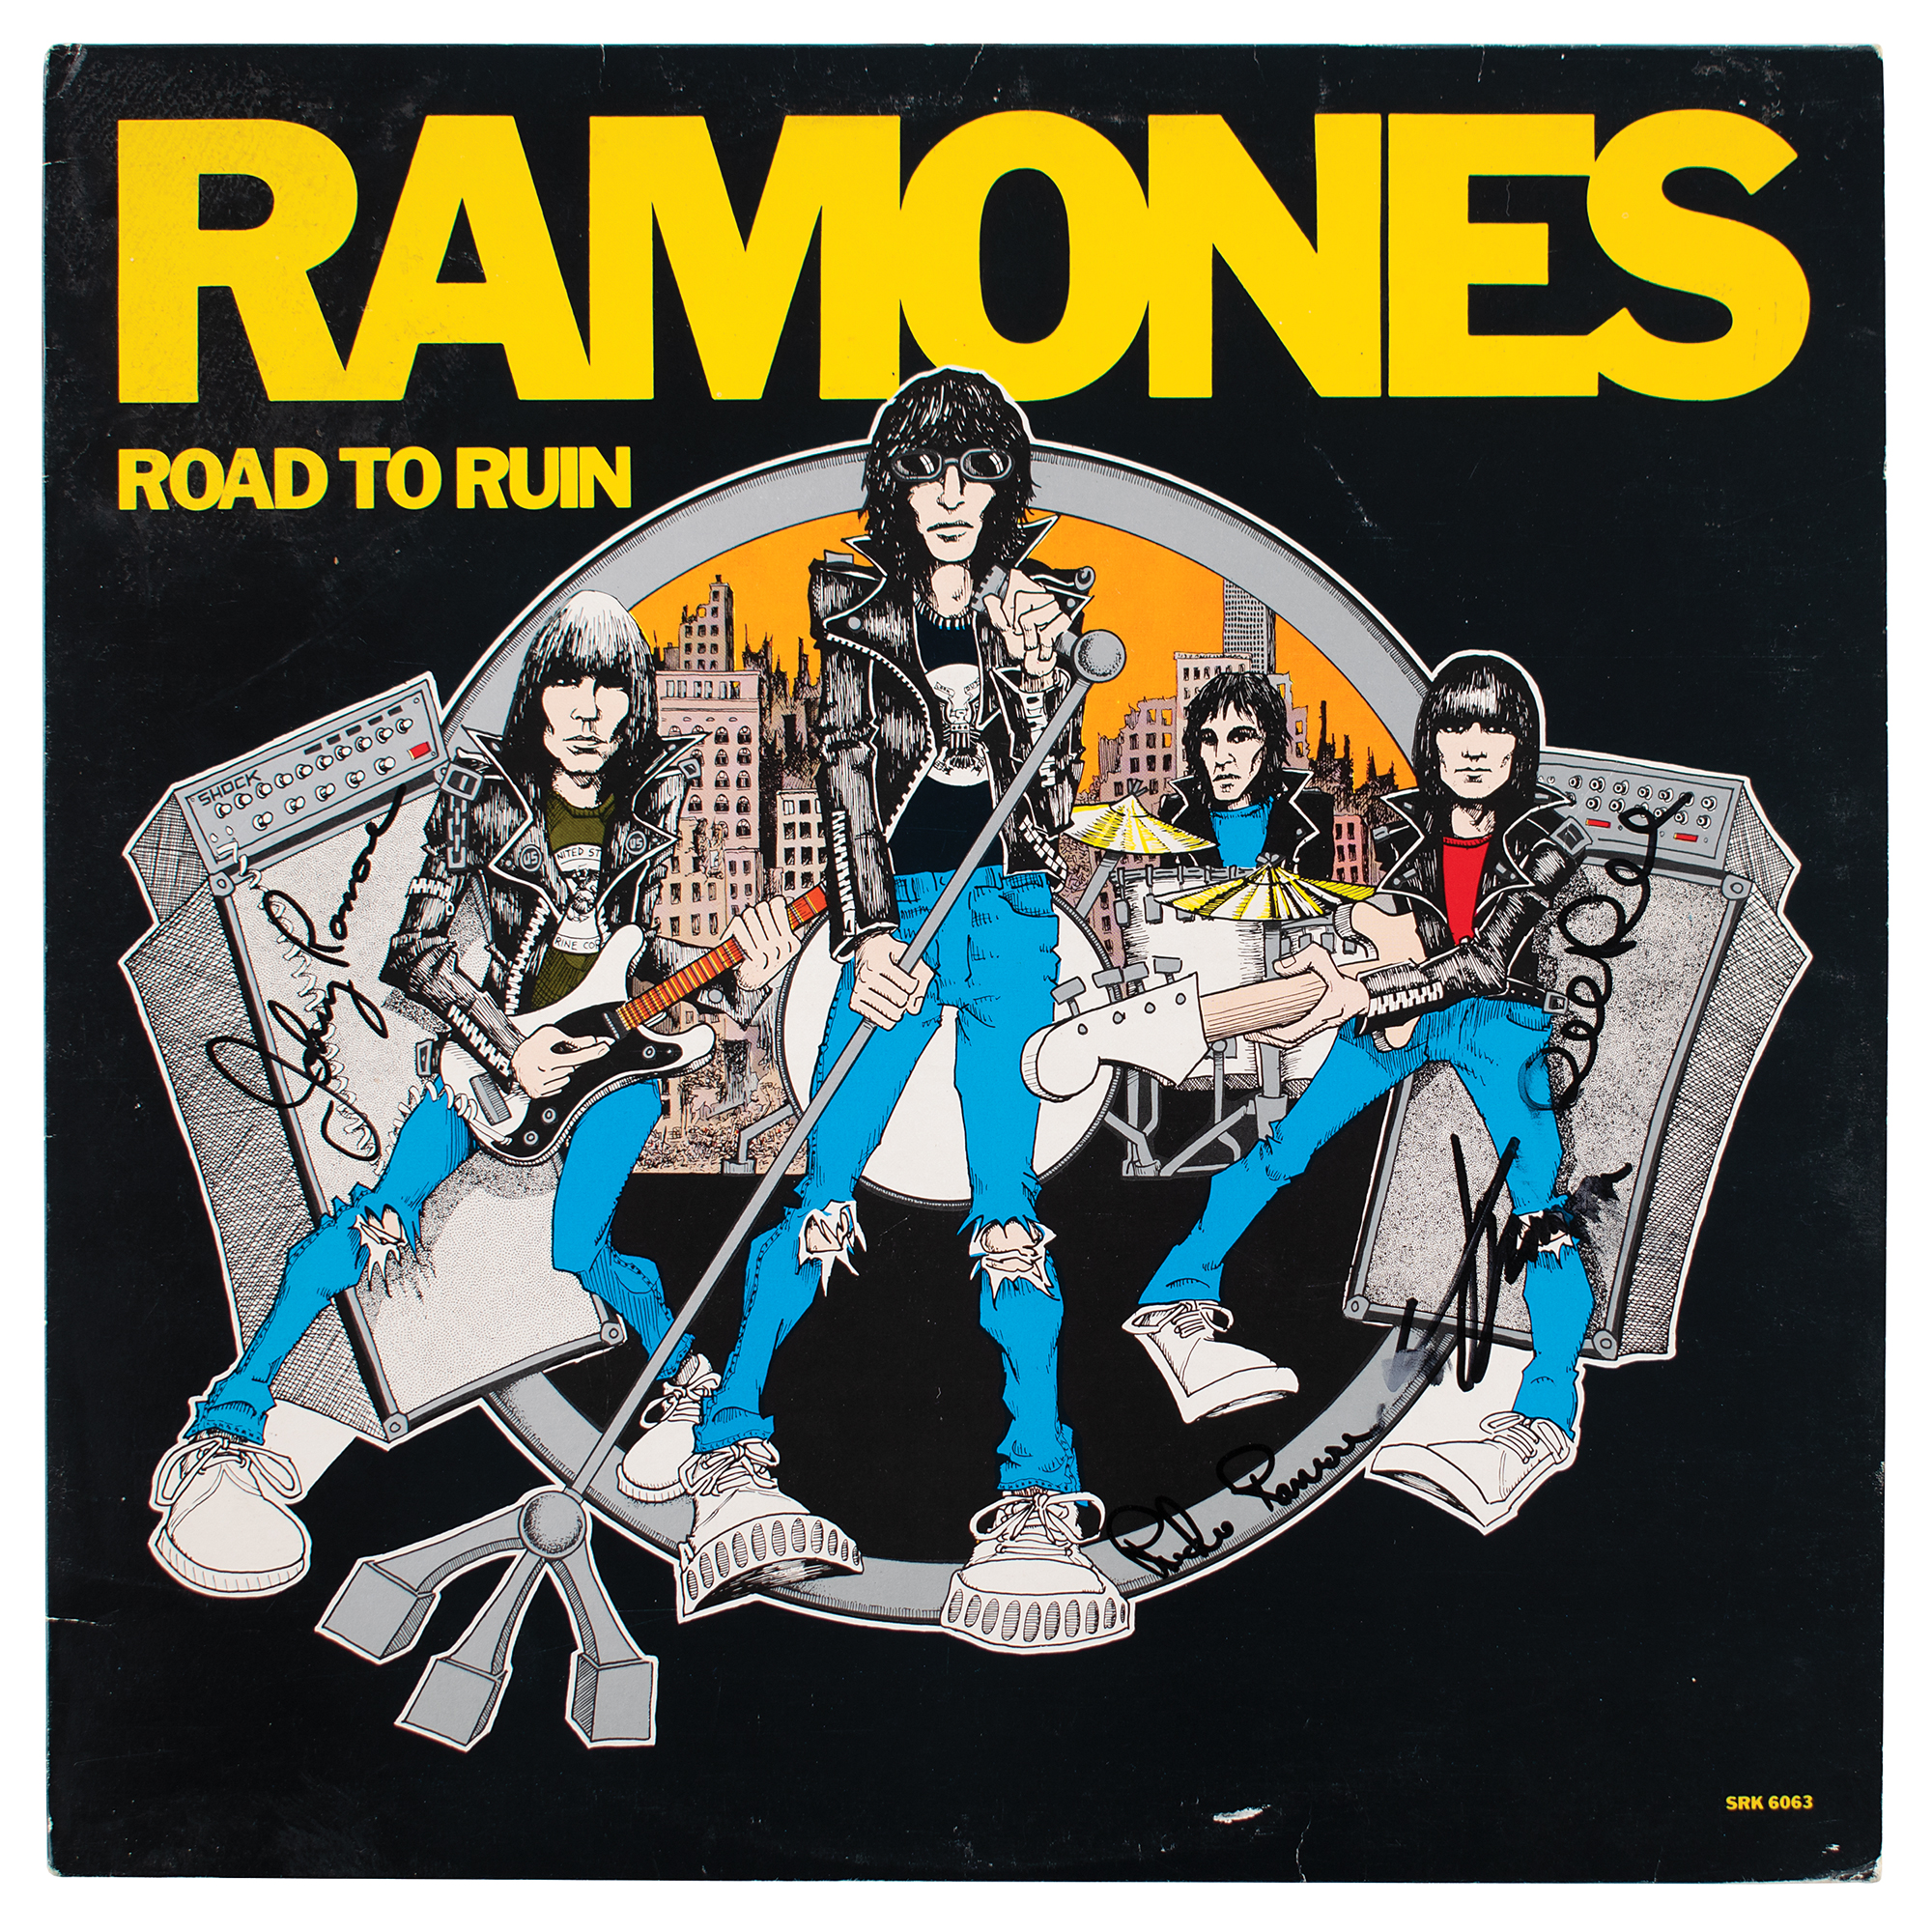 Lot #5339 Ramones Signed Album and Vinyl Record